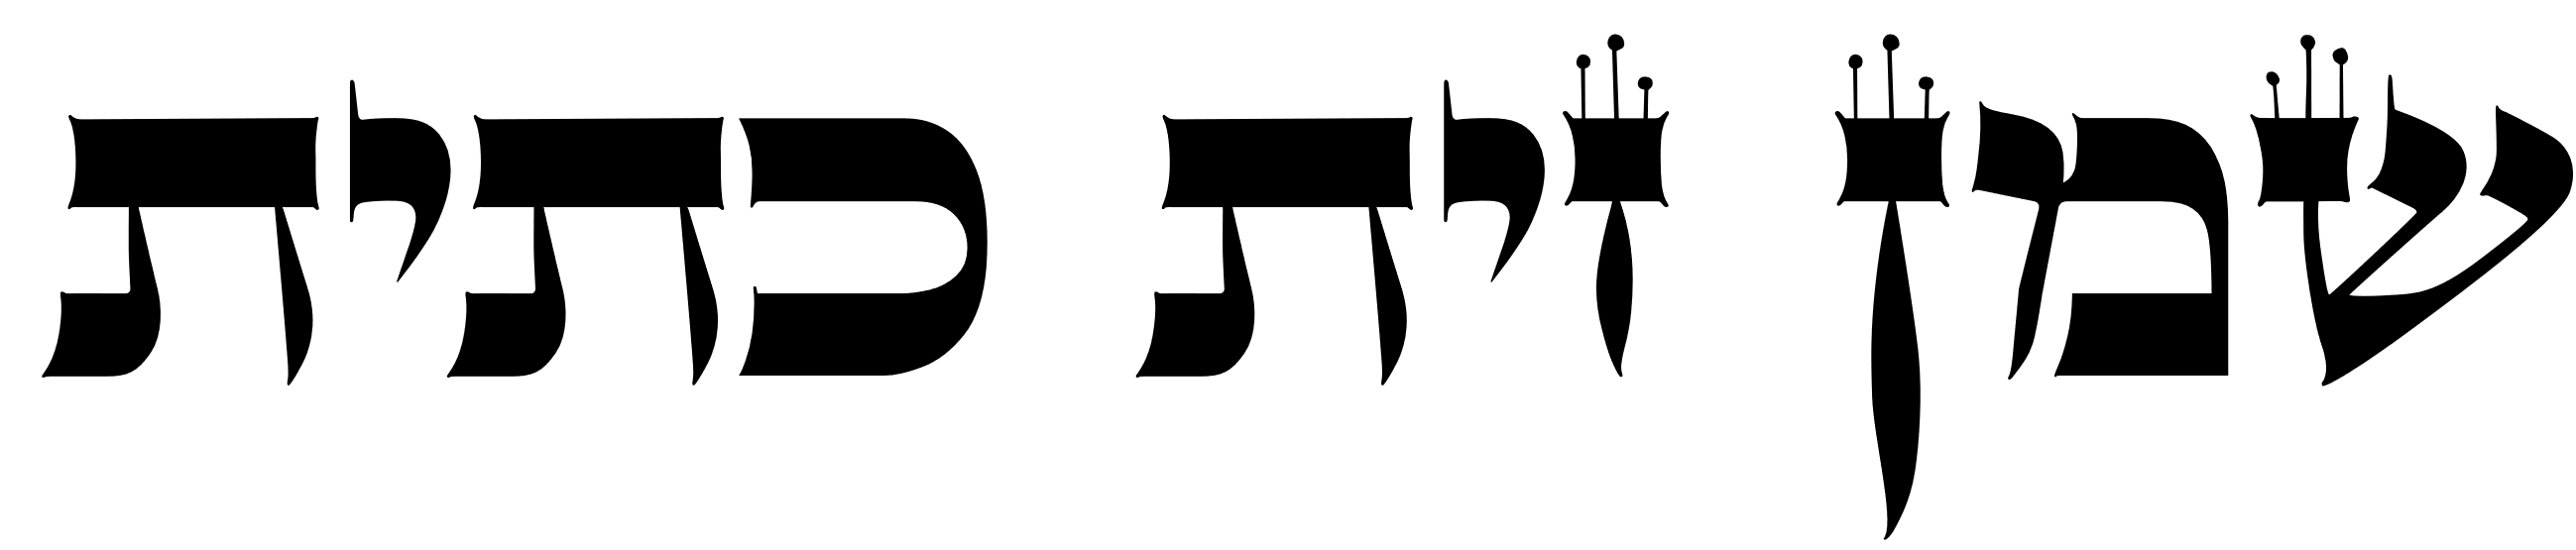 Torah scroll letters.png